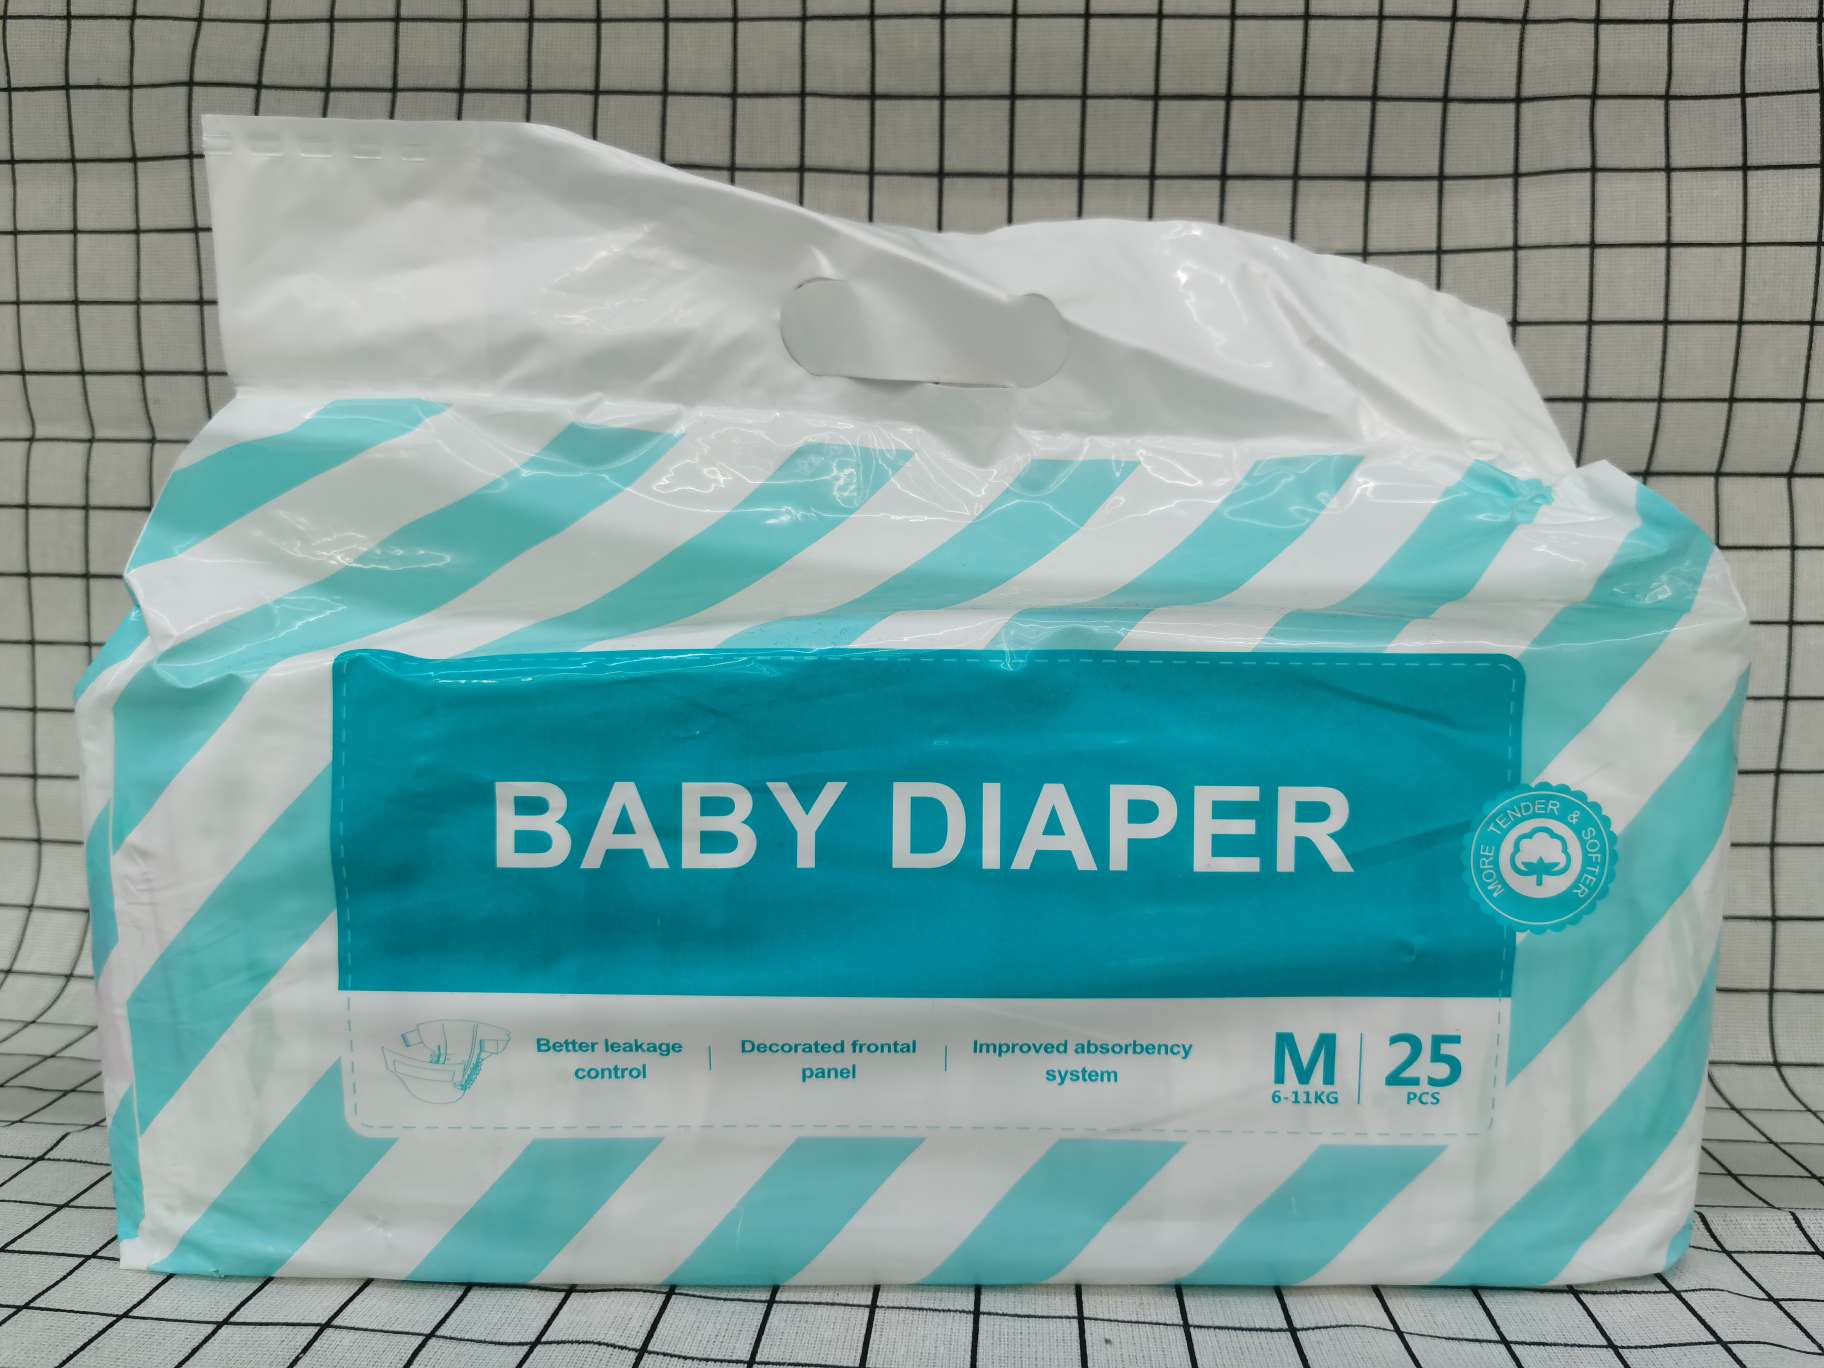 baby diaper: M: 25 pcs
电联订做